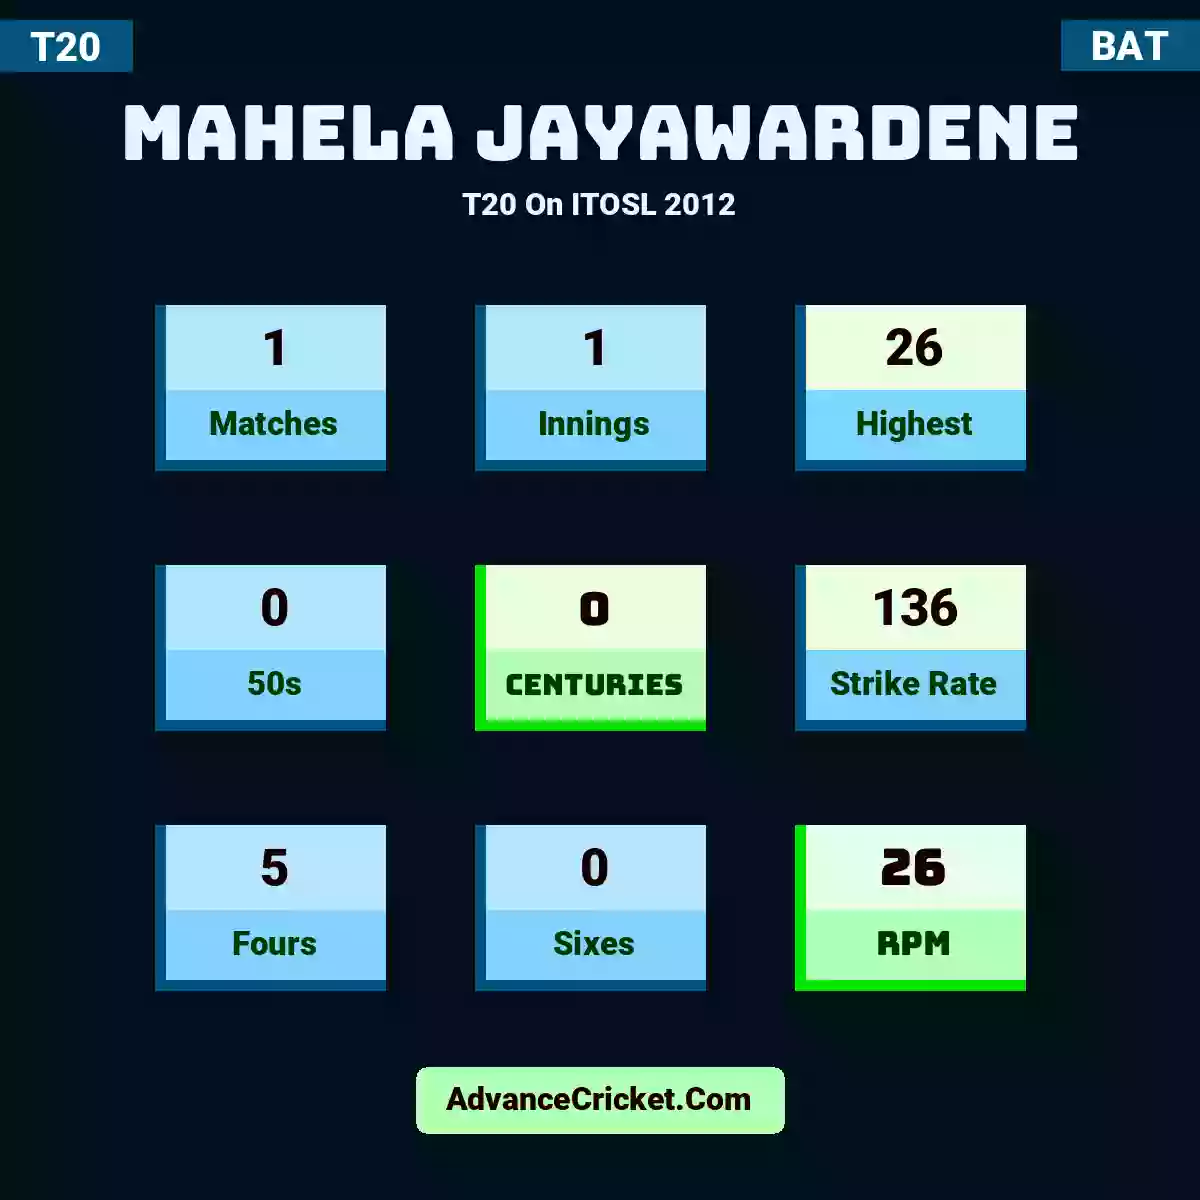 Mahela Jayawardene T20  On ITOSL 2012, Mahela Jayawardene played 1 matches, scored 26 runs as highest, 0 half-centuries, and 0 centuries, with a strike rate of 136. M.Jayawardene hit 5 fours and 0 sixes, with an RPM of 26.